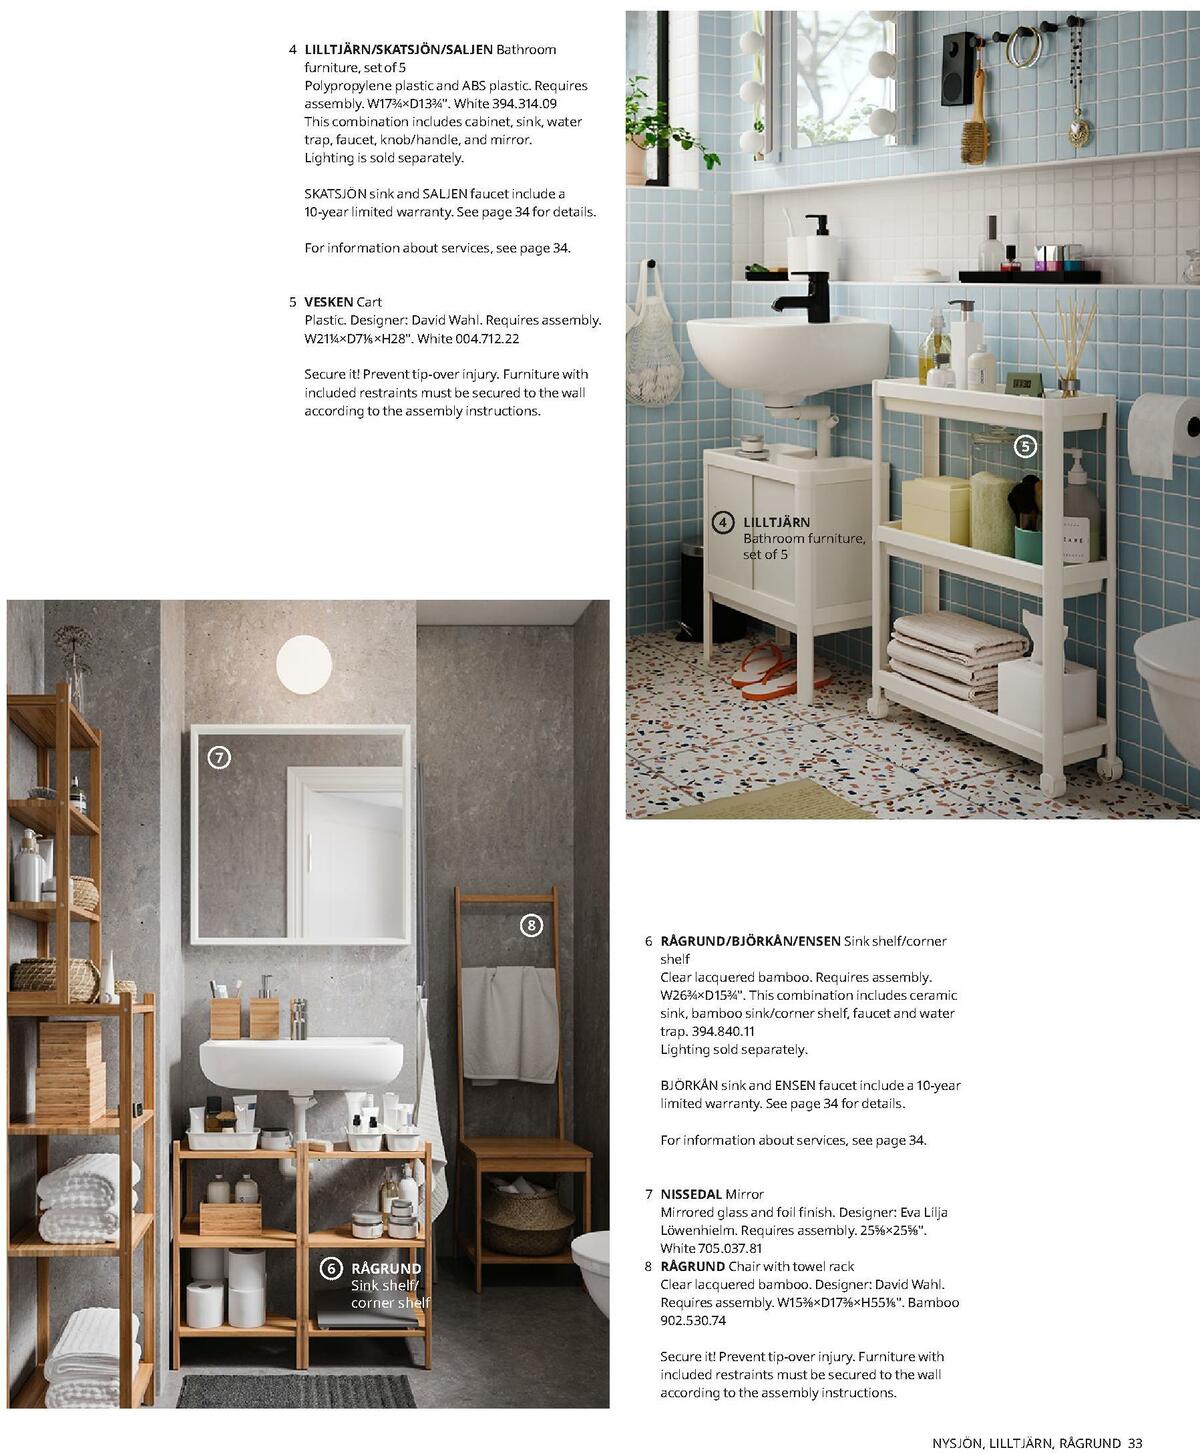 IKEA Bathrooms Brochure Weekly Ad from August 26